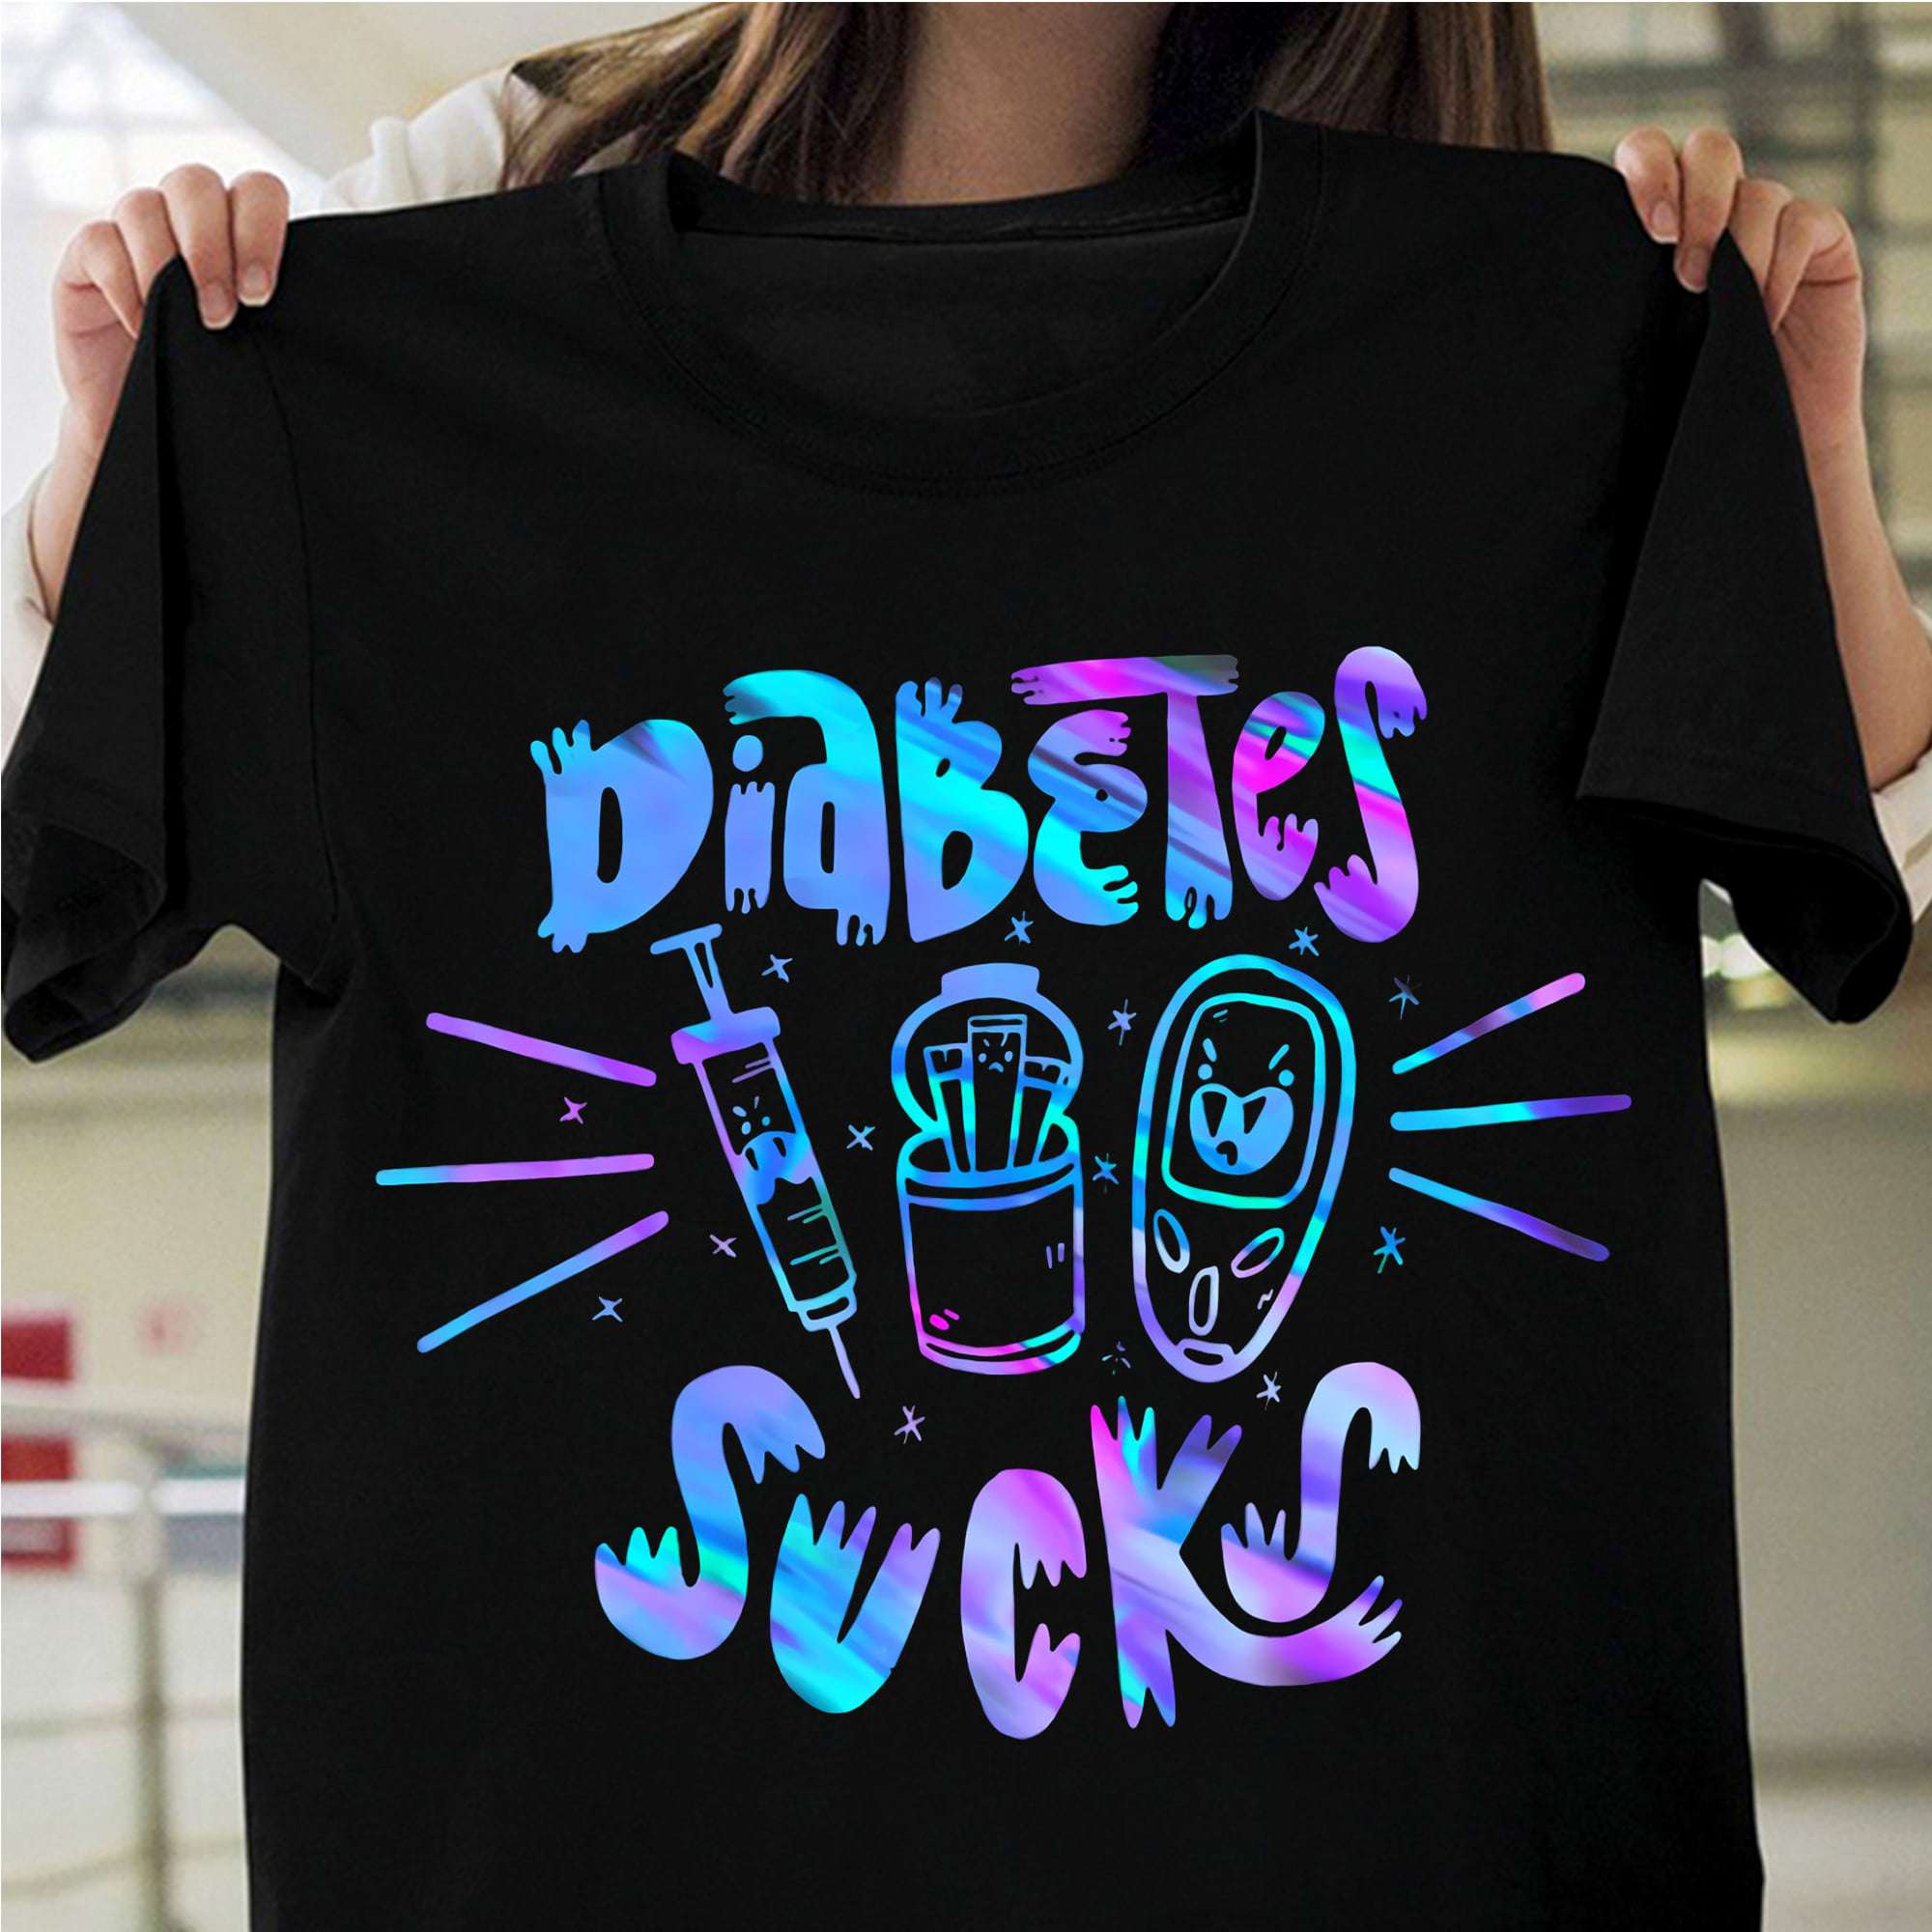 Diabetes sucks - Diabetes awareness, syringe of insulin